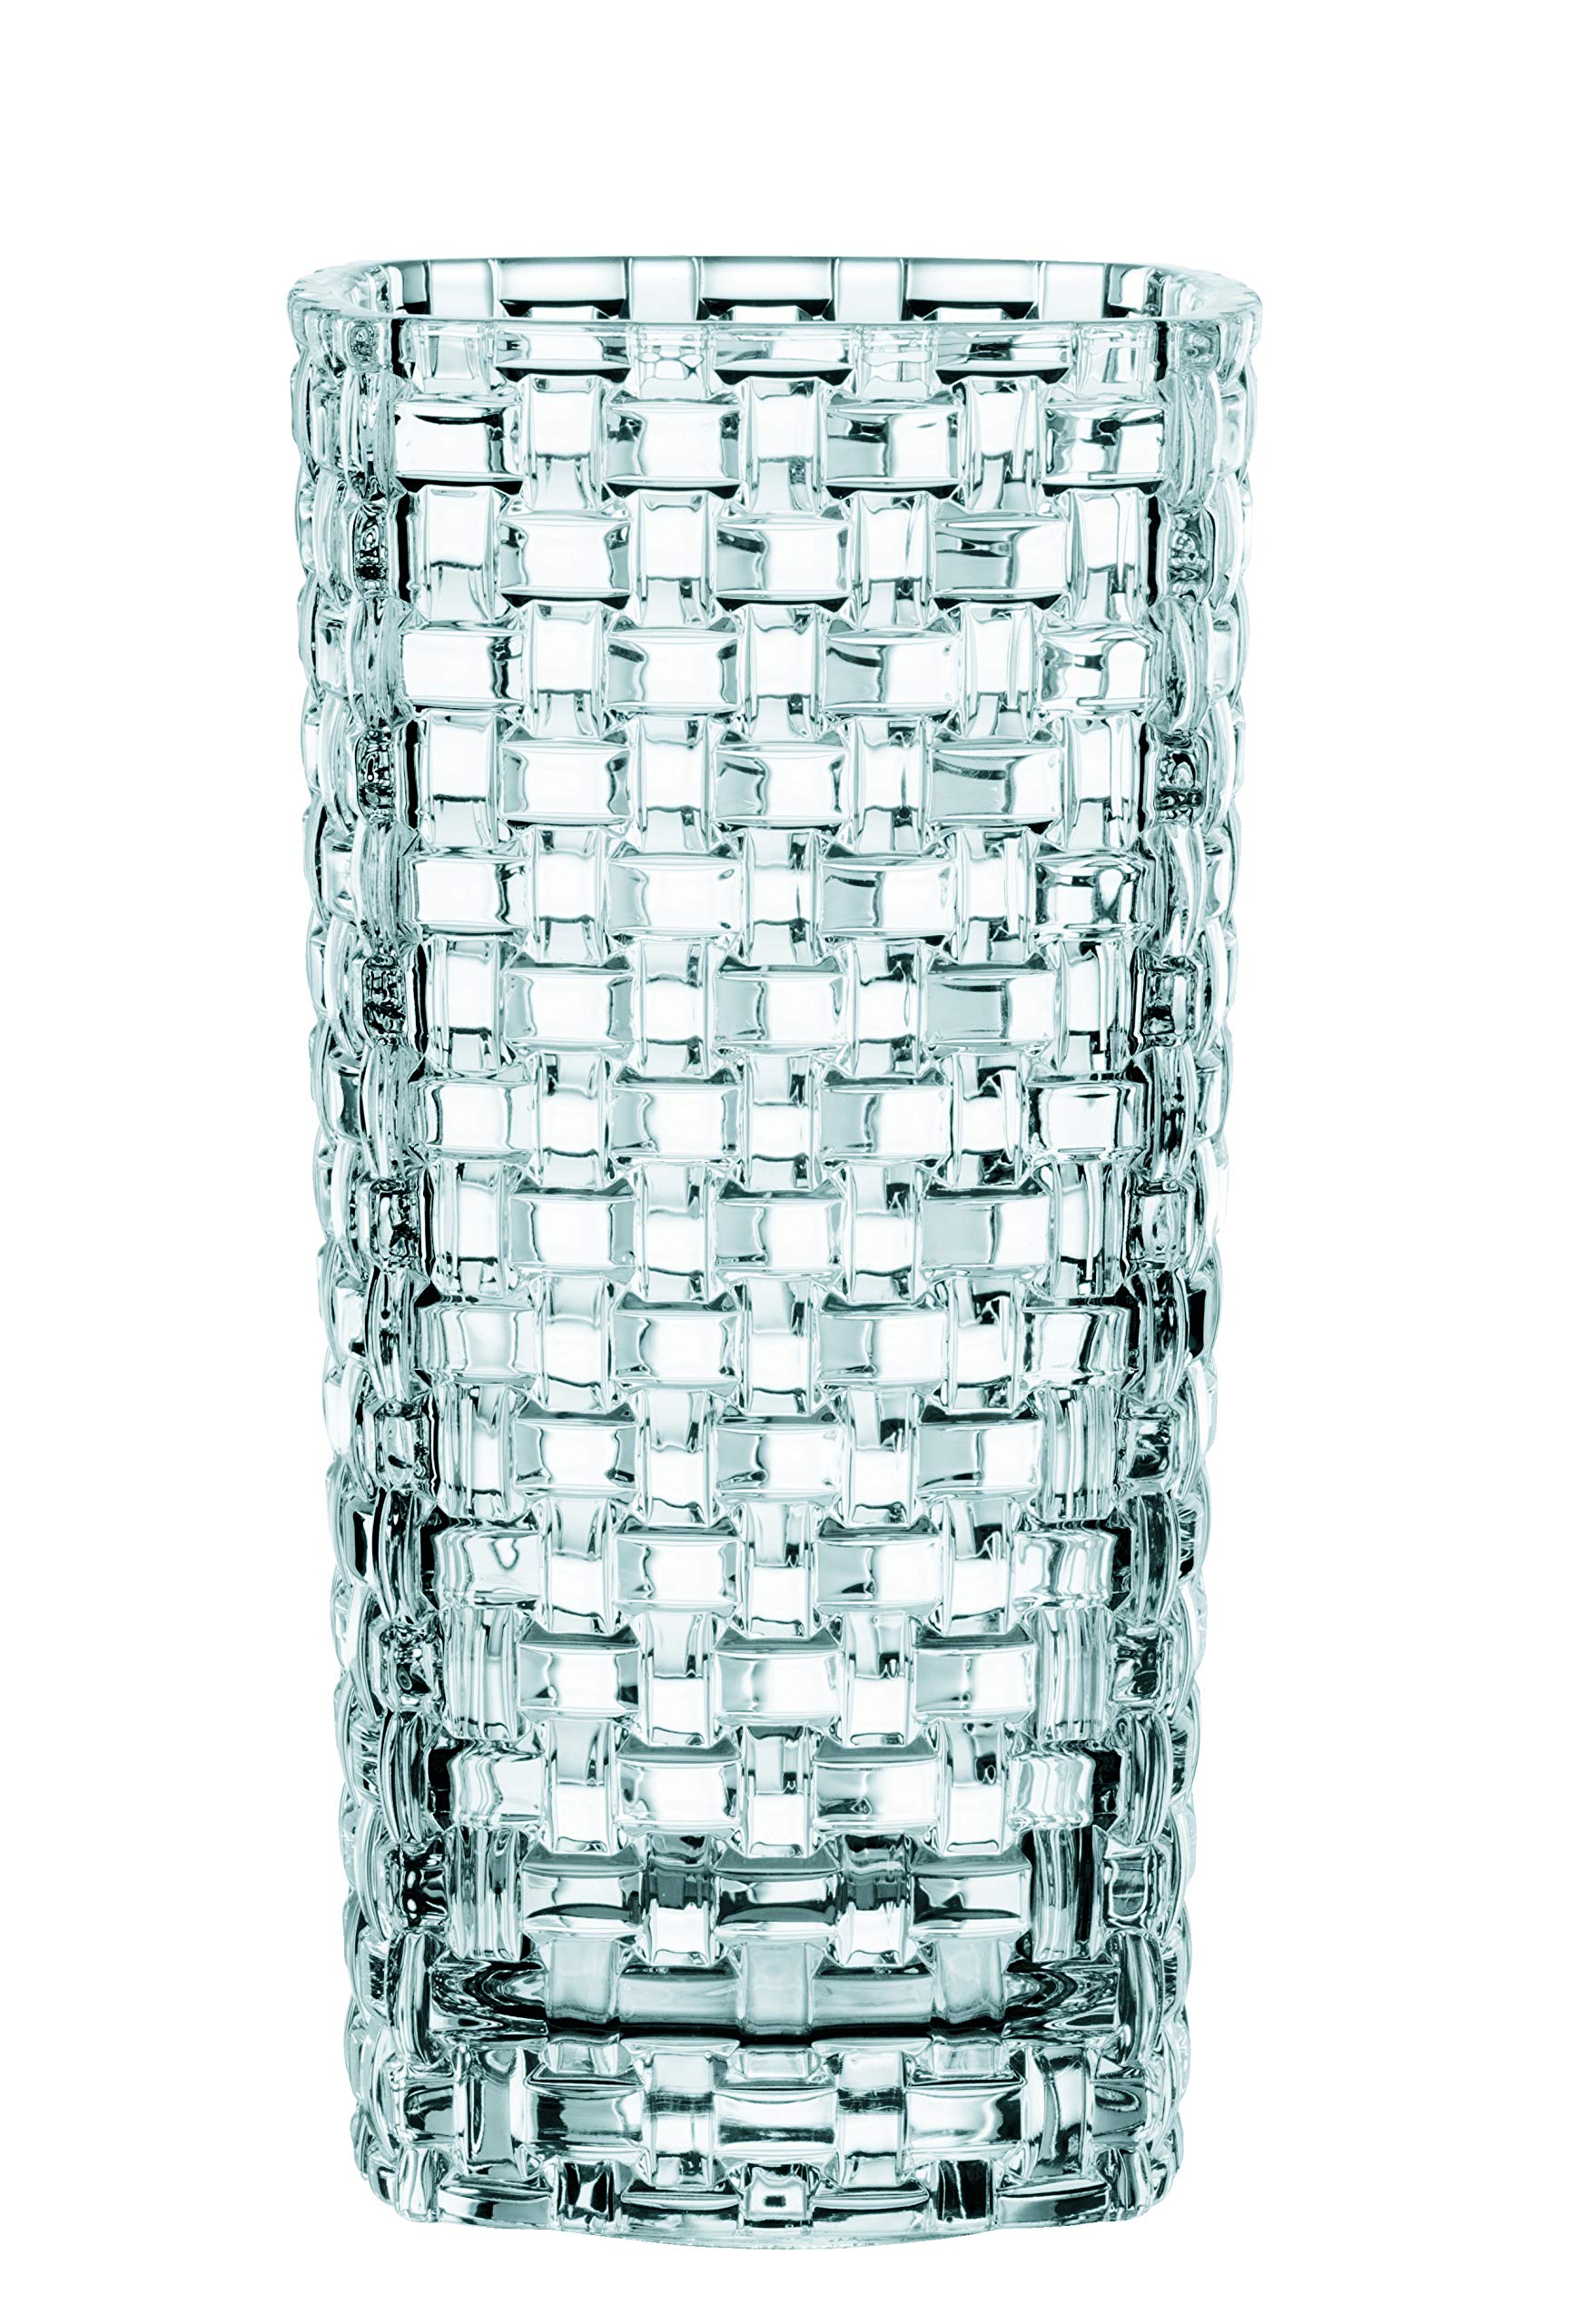 acheter Spiegelau & Nachtmann, Vase, Verre en Cristal, 28 cm, 0080729–0, Bossa Nova RAWSblwzx boutique en ligne